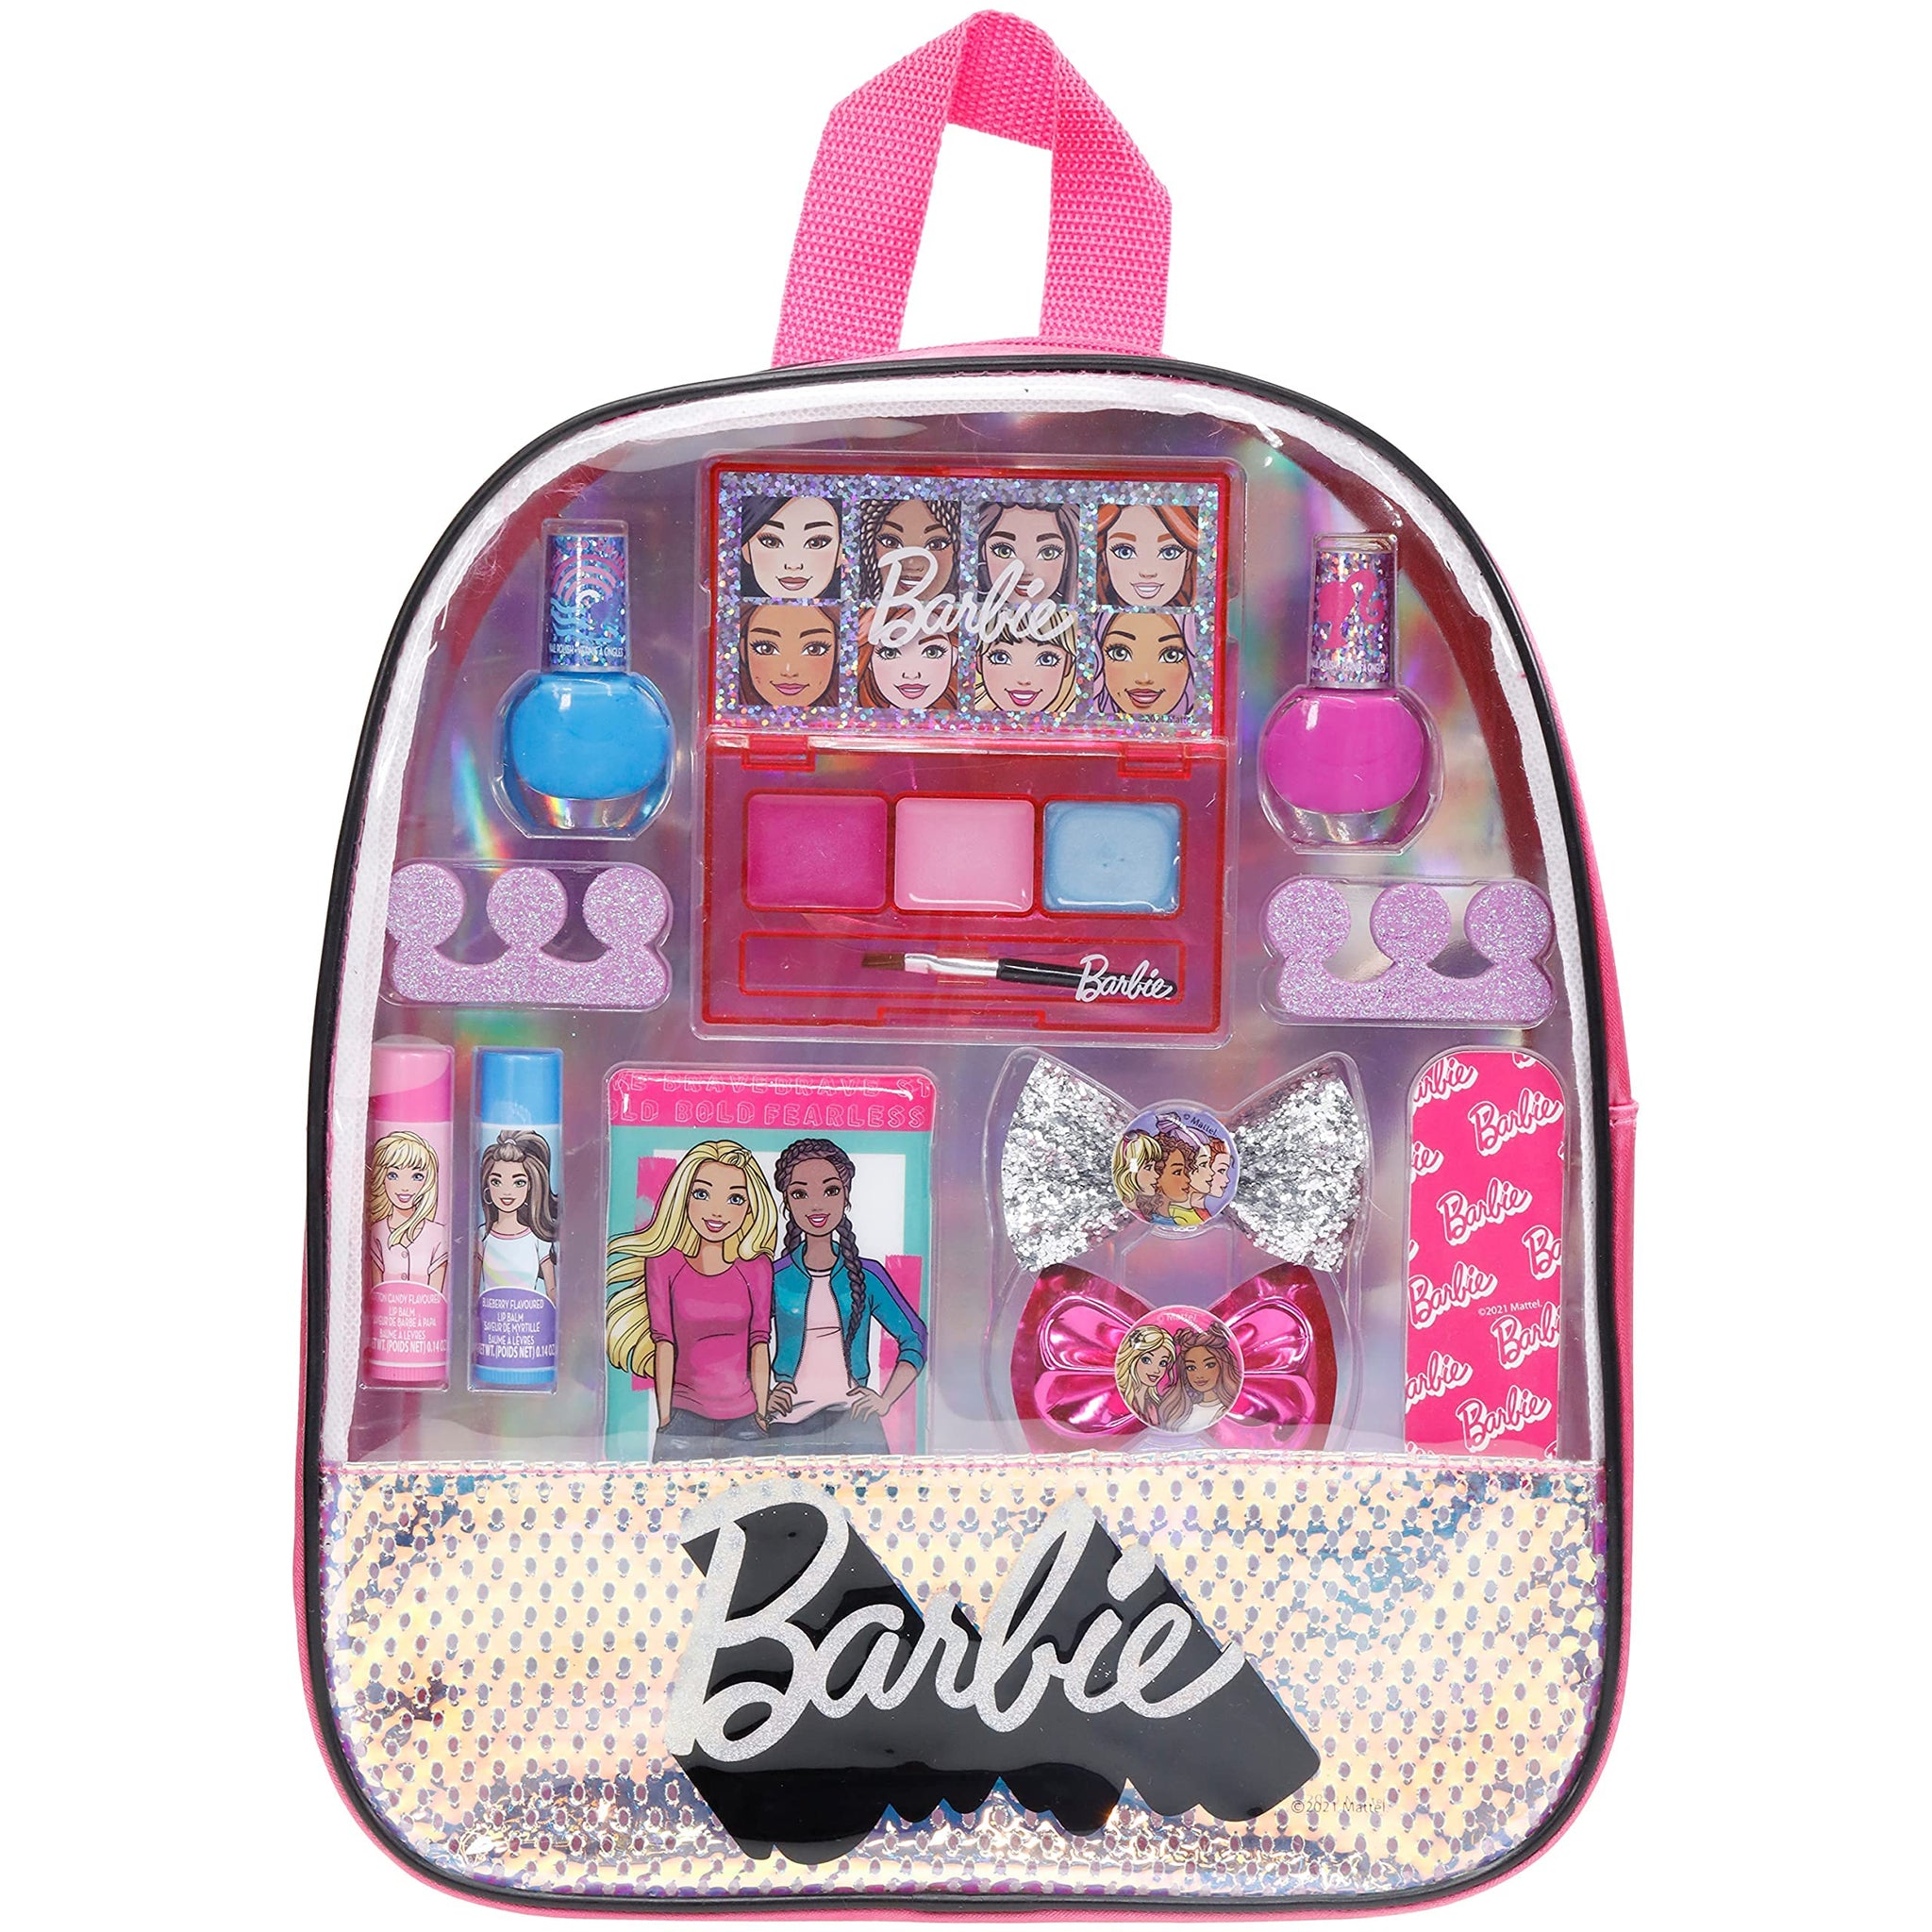 Barbie Travel Makeup Bag 2003 Mattel No. B8547 Small Luggage Bag NEW -  We-R-Toys